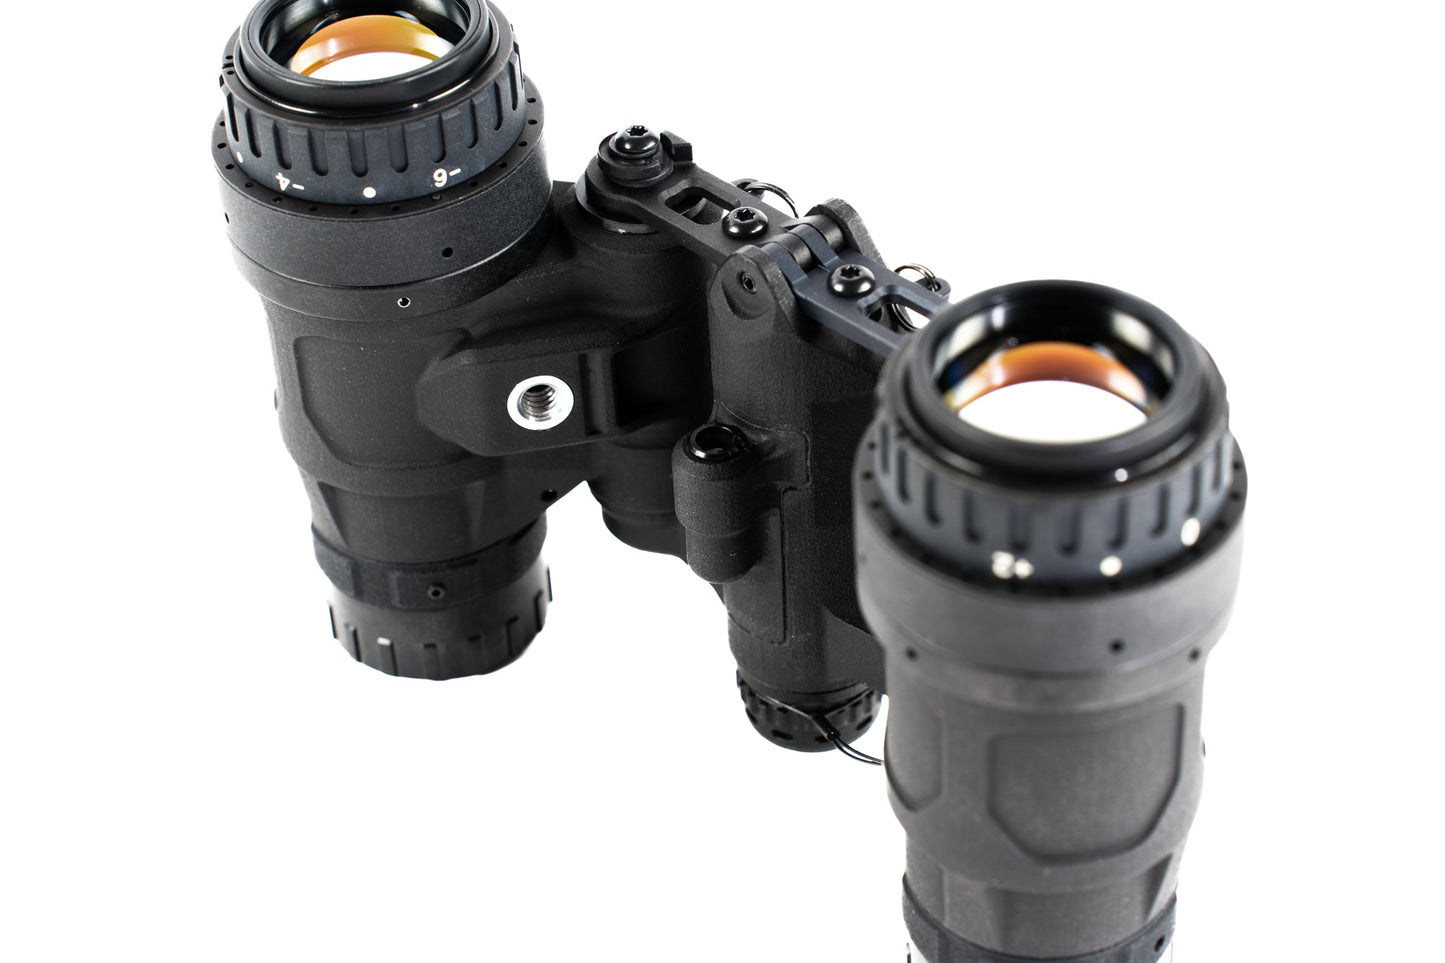 Custom Built Nocturn Industries Daisho Complete Binocular NVG